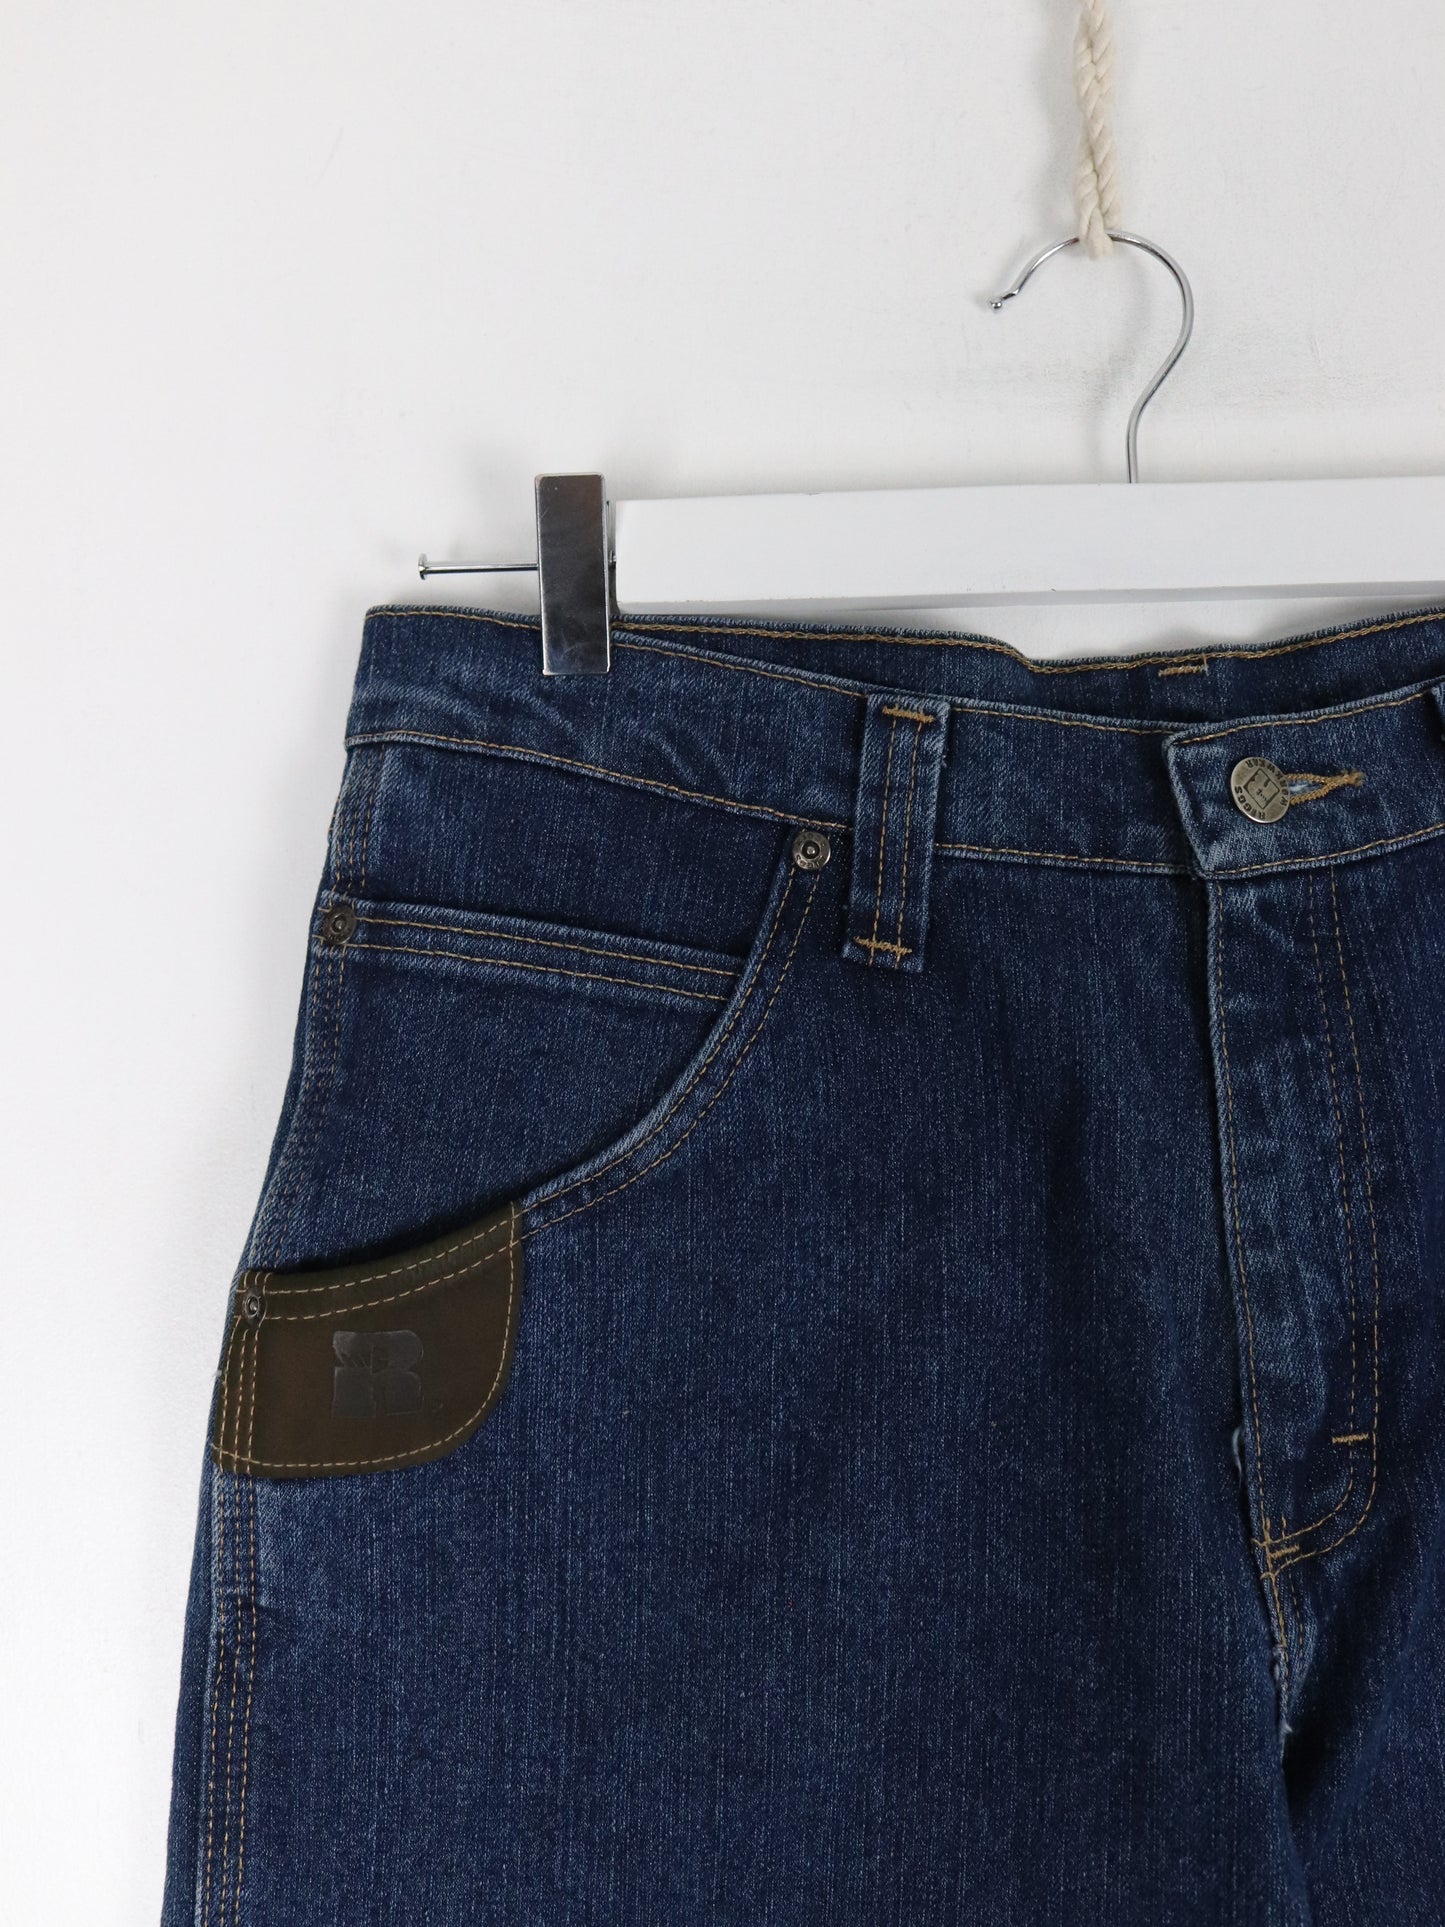 Wrangler Riggs Work Wear Shorts Fits Mens 31 Blue Denim Jorts Cut Off